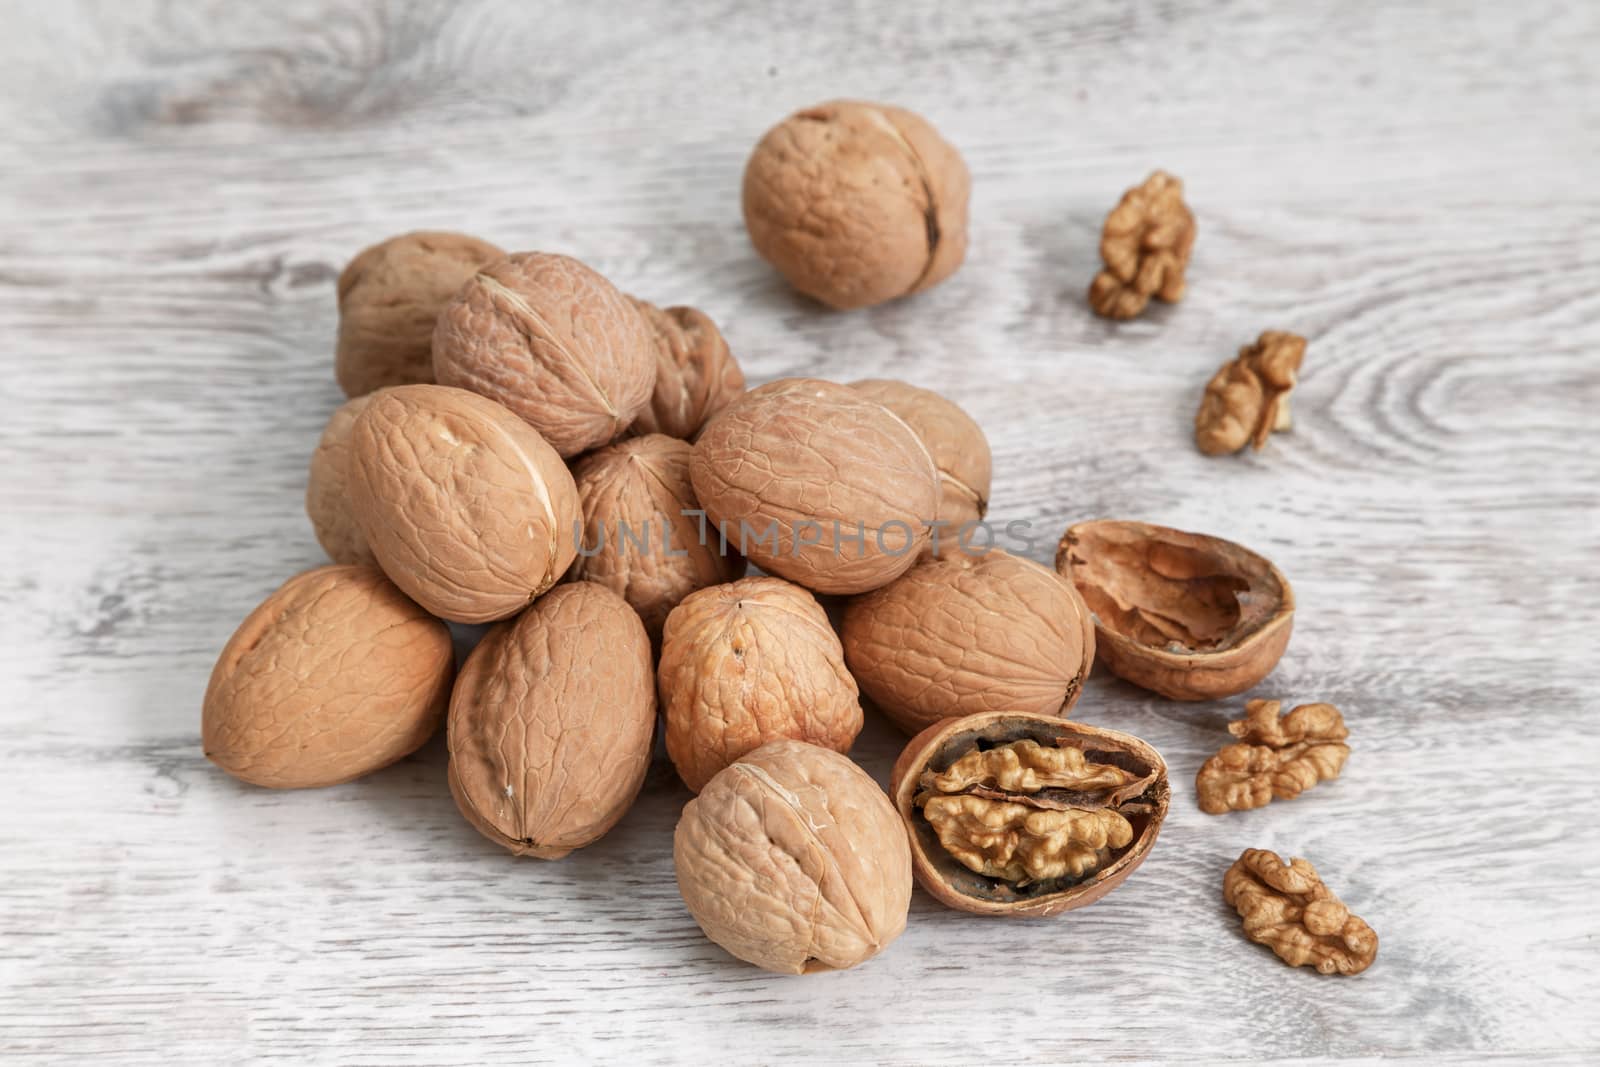 Walnuts whole in their skins, chopped, nut hulls, walnut kernels